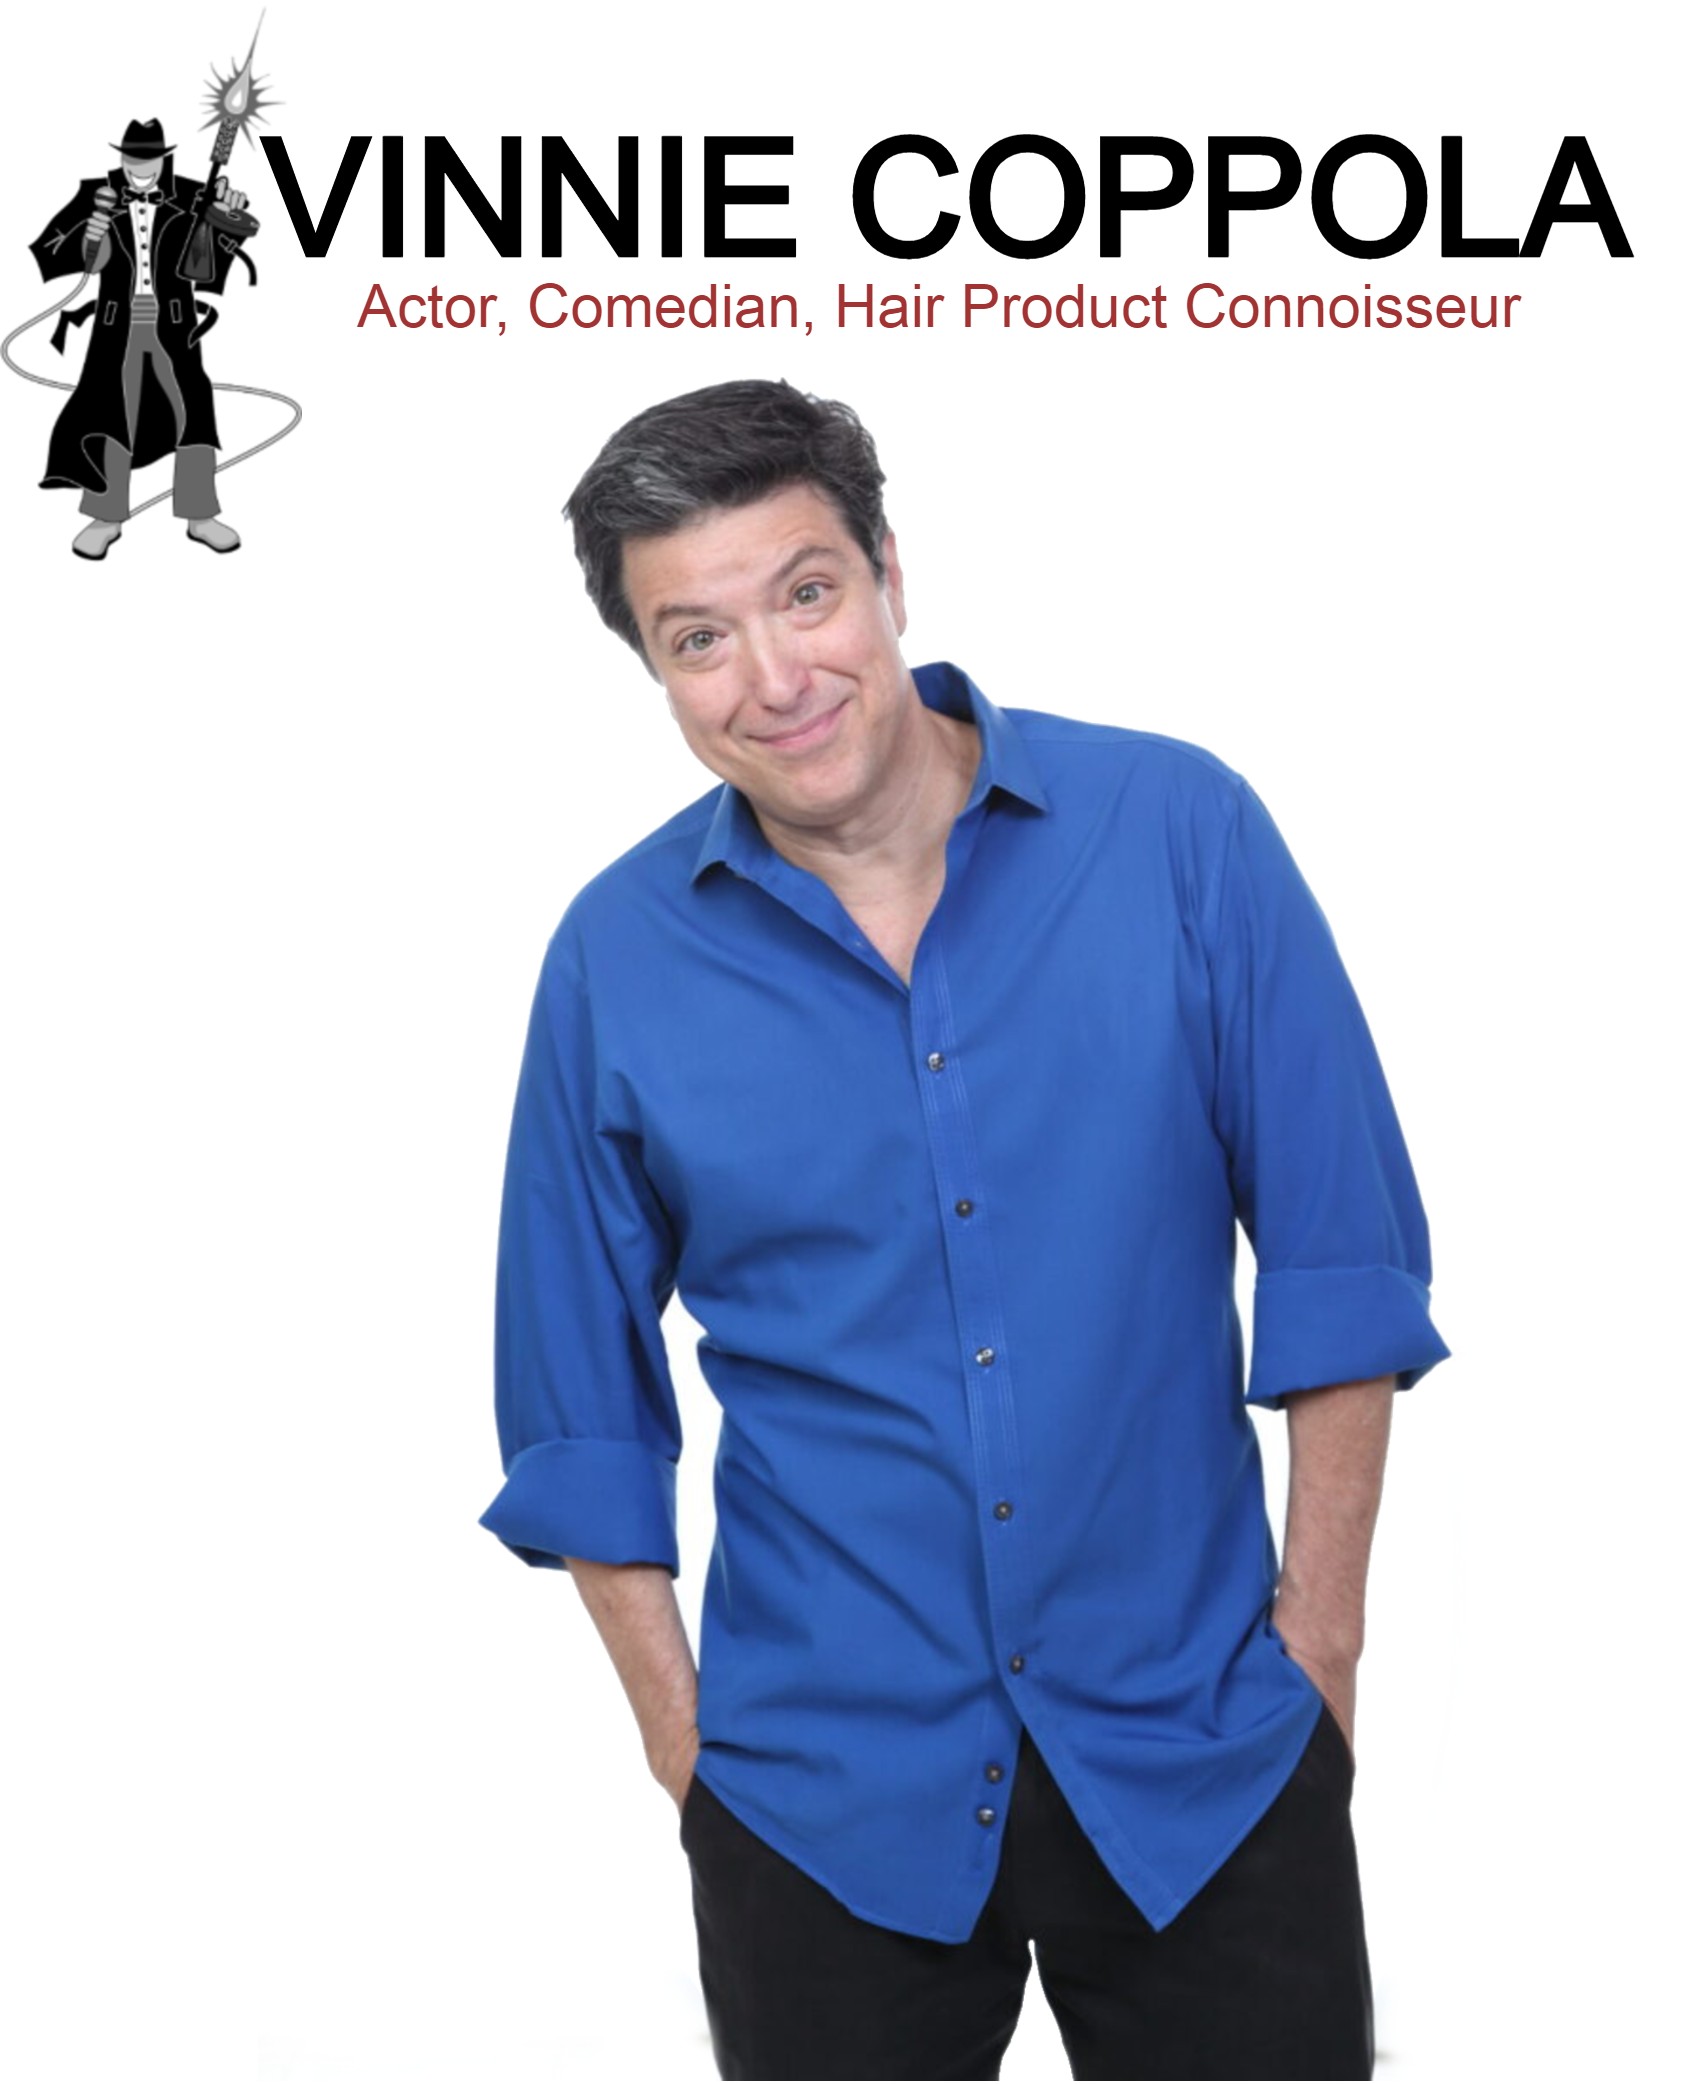 Vinnie Coppola